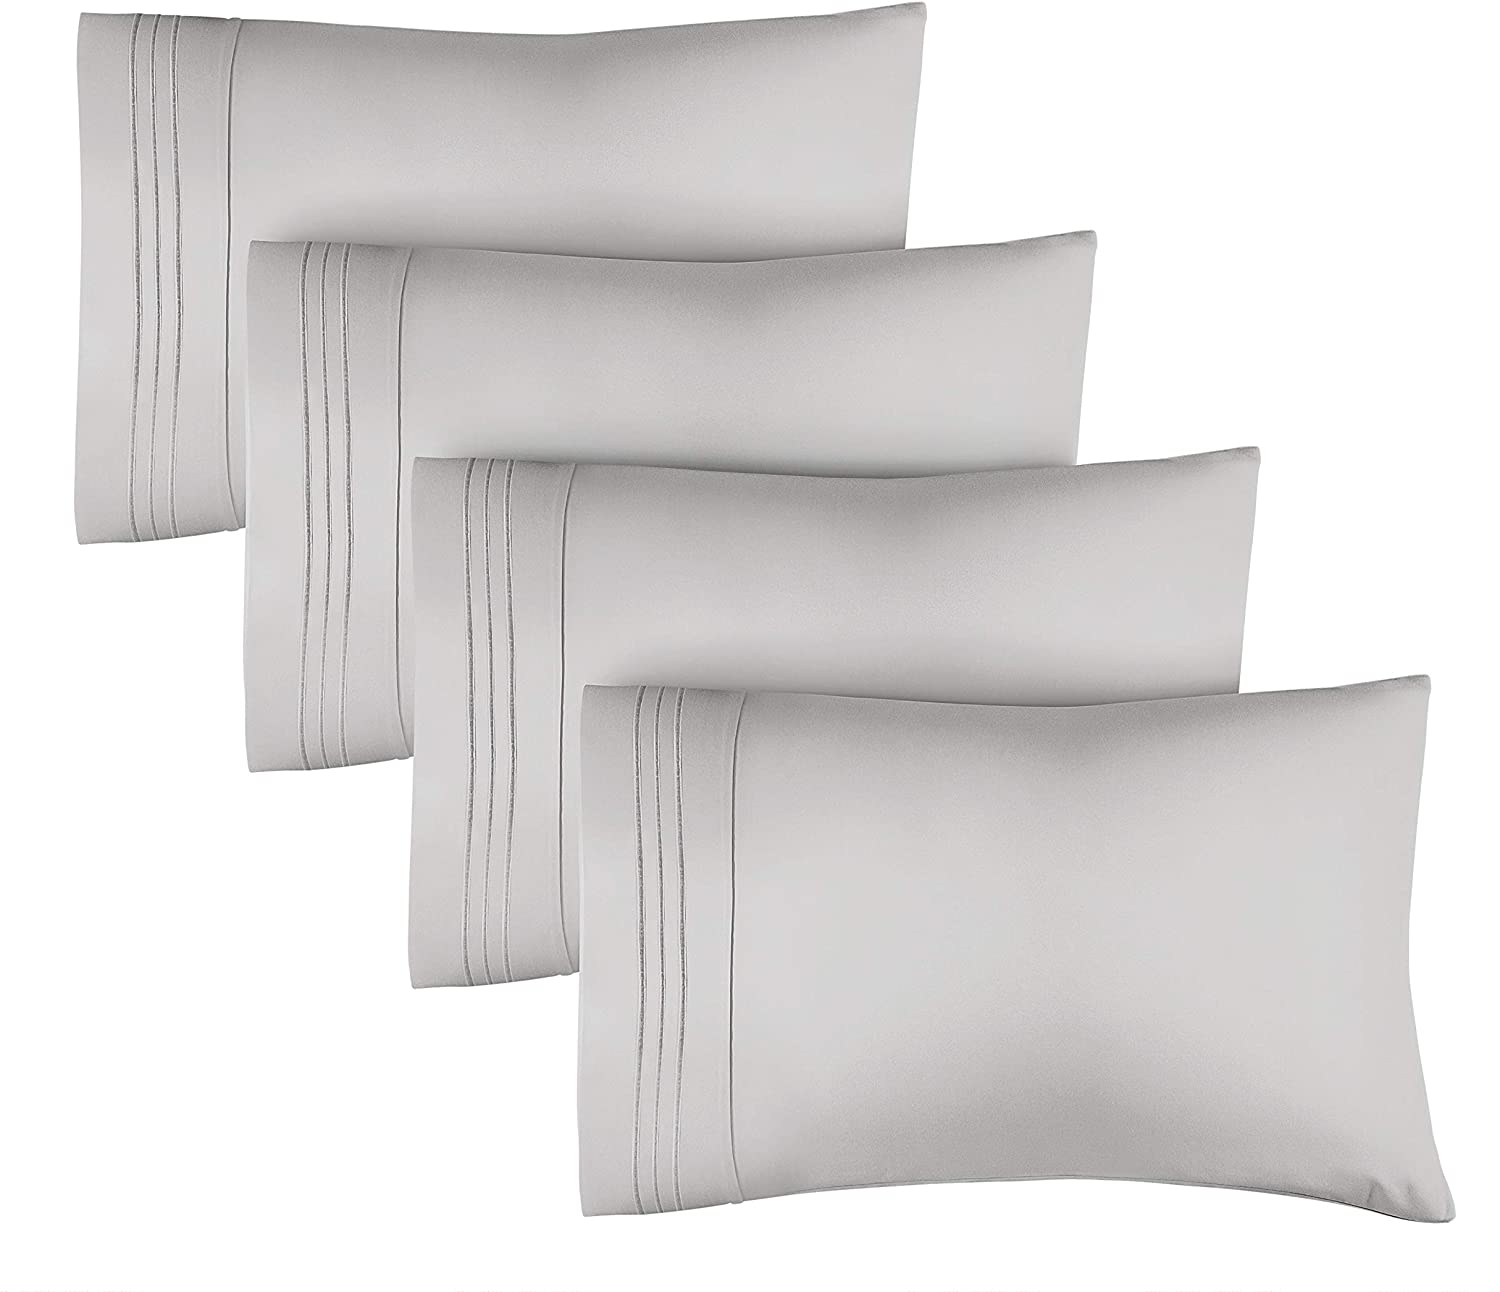 4 Pillowcase Set - Light Grey